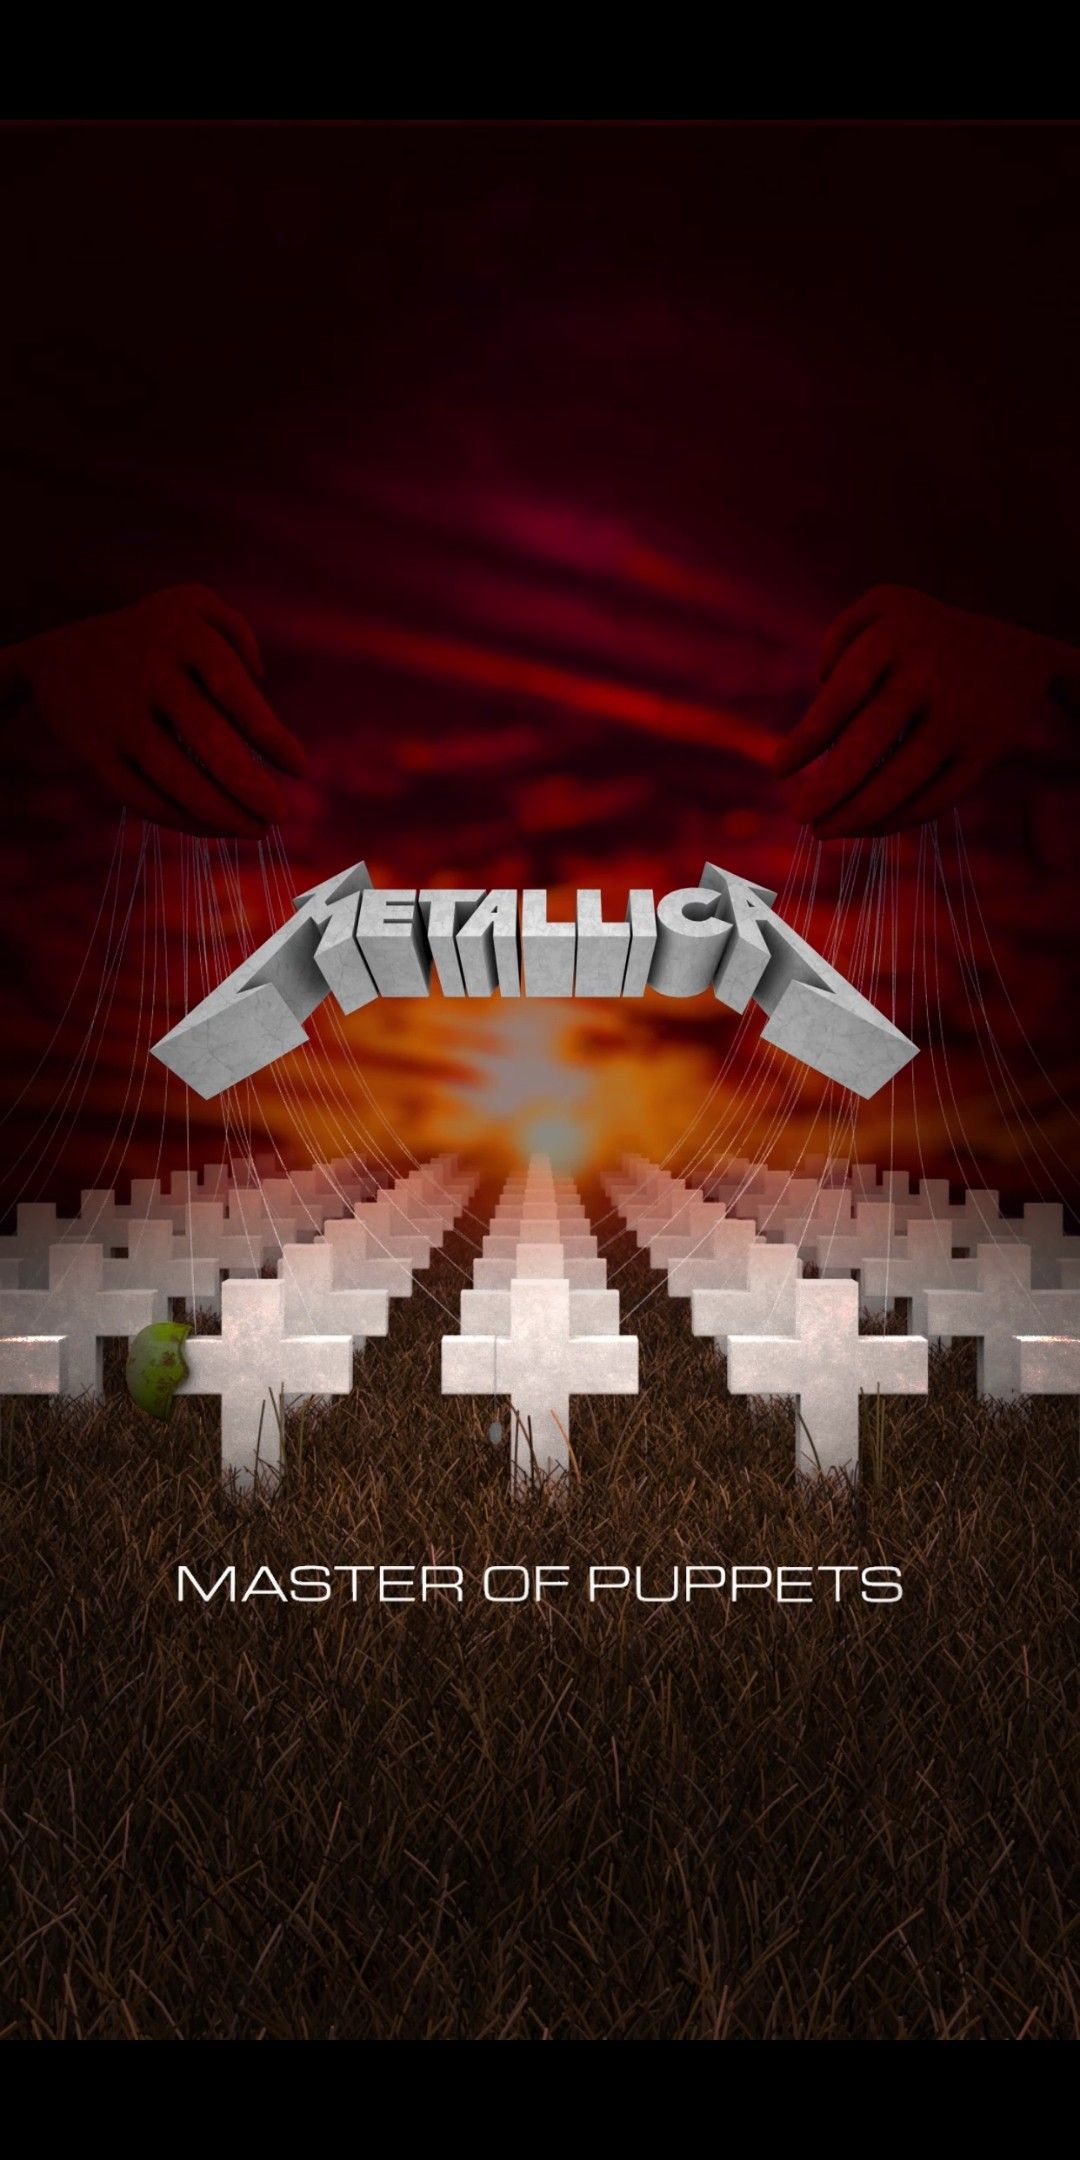 Metallica master of puppets wallpaper iPhone. Metallica album covers, Metallica art, Metallica albums